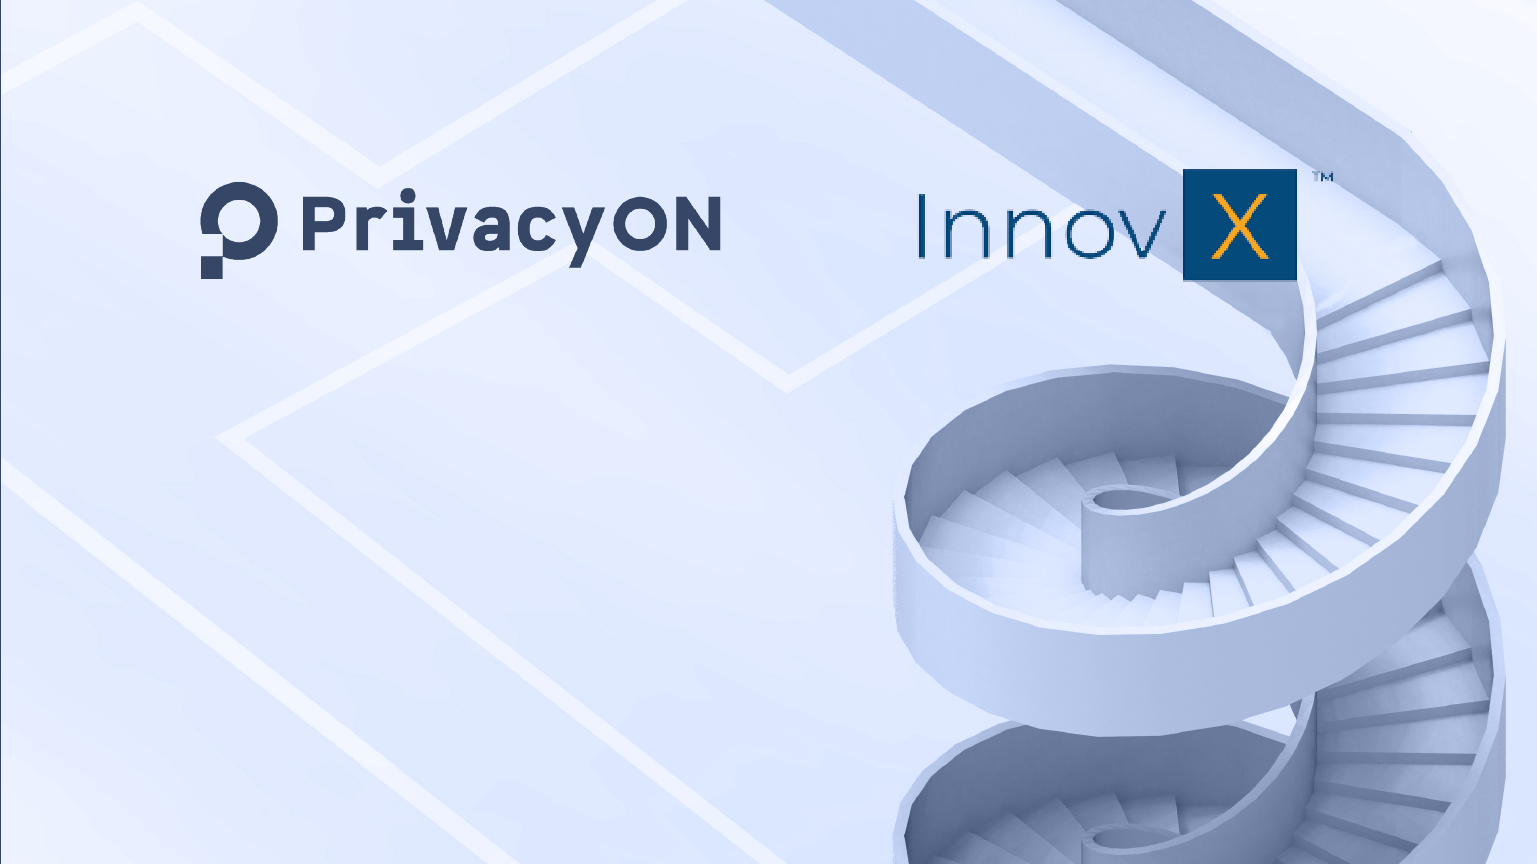 PrivacyON Innovx_partnership